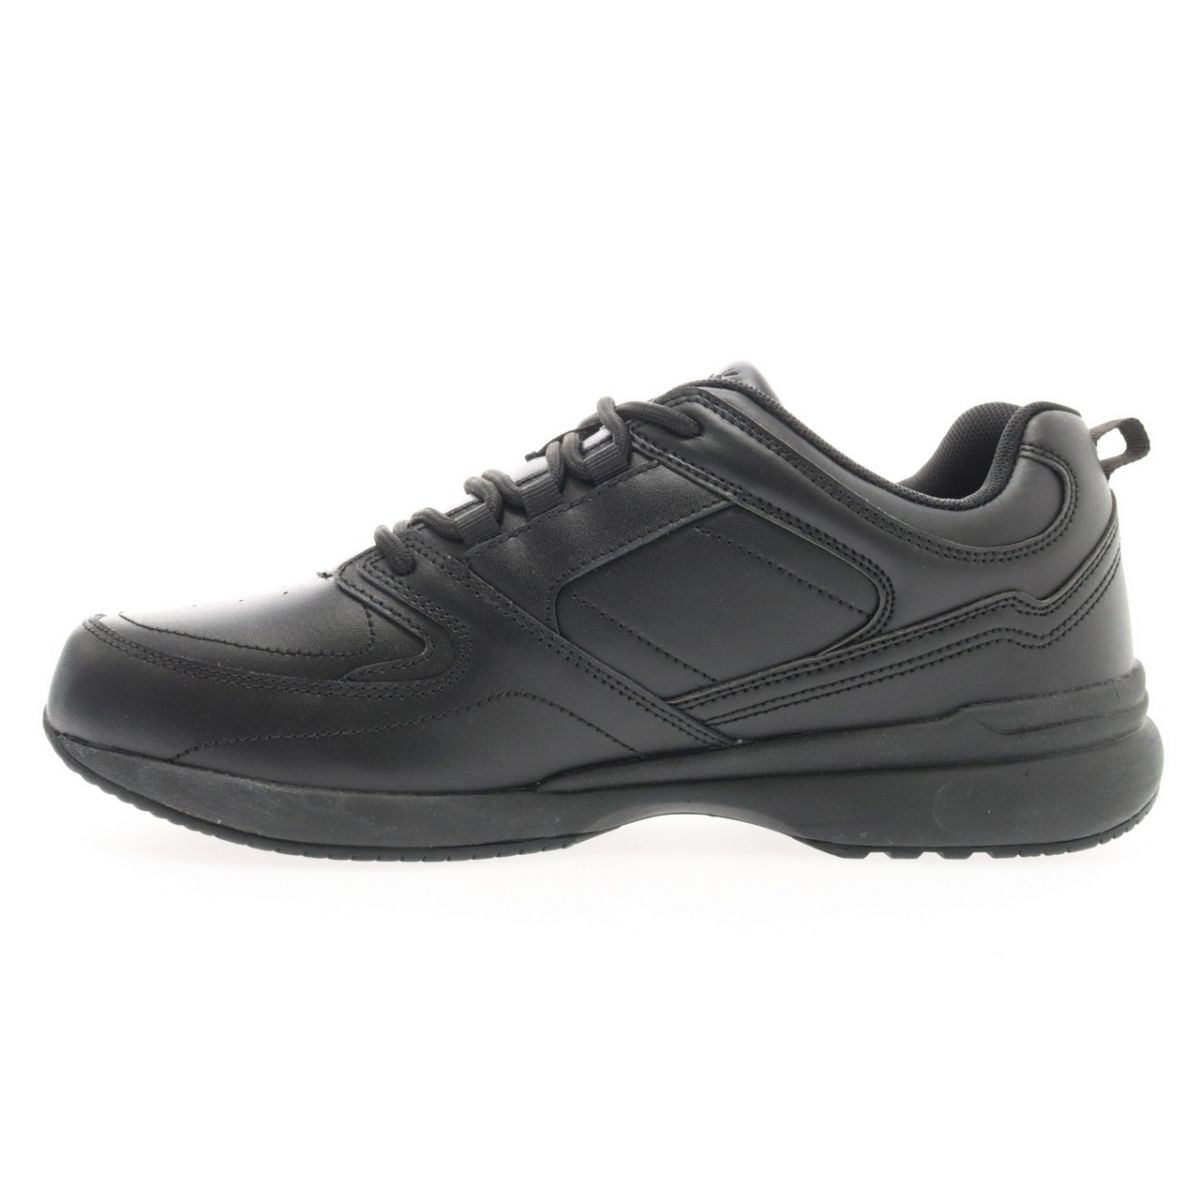 Propet Men's Life Walker Sport Sneaker Black - MAA272LBLK BLACK - BLACK, 15 Wide